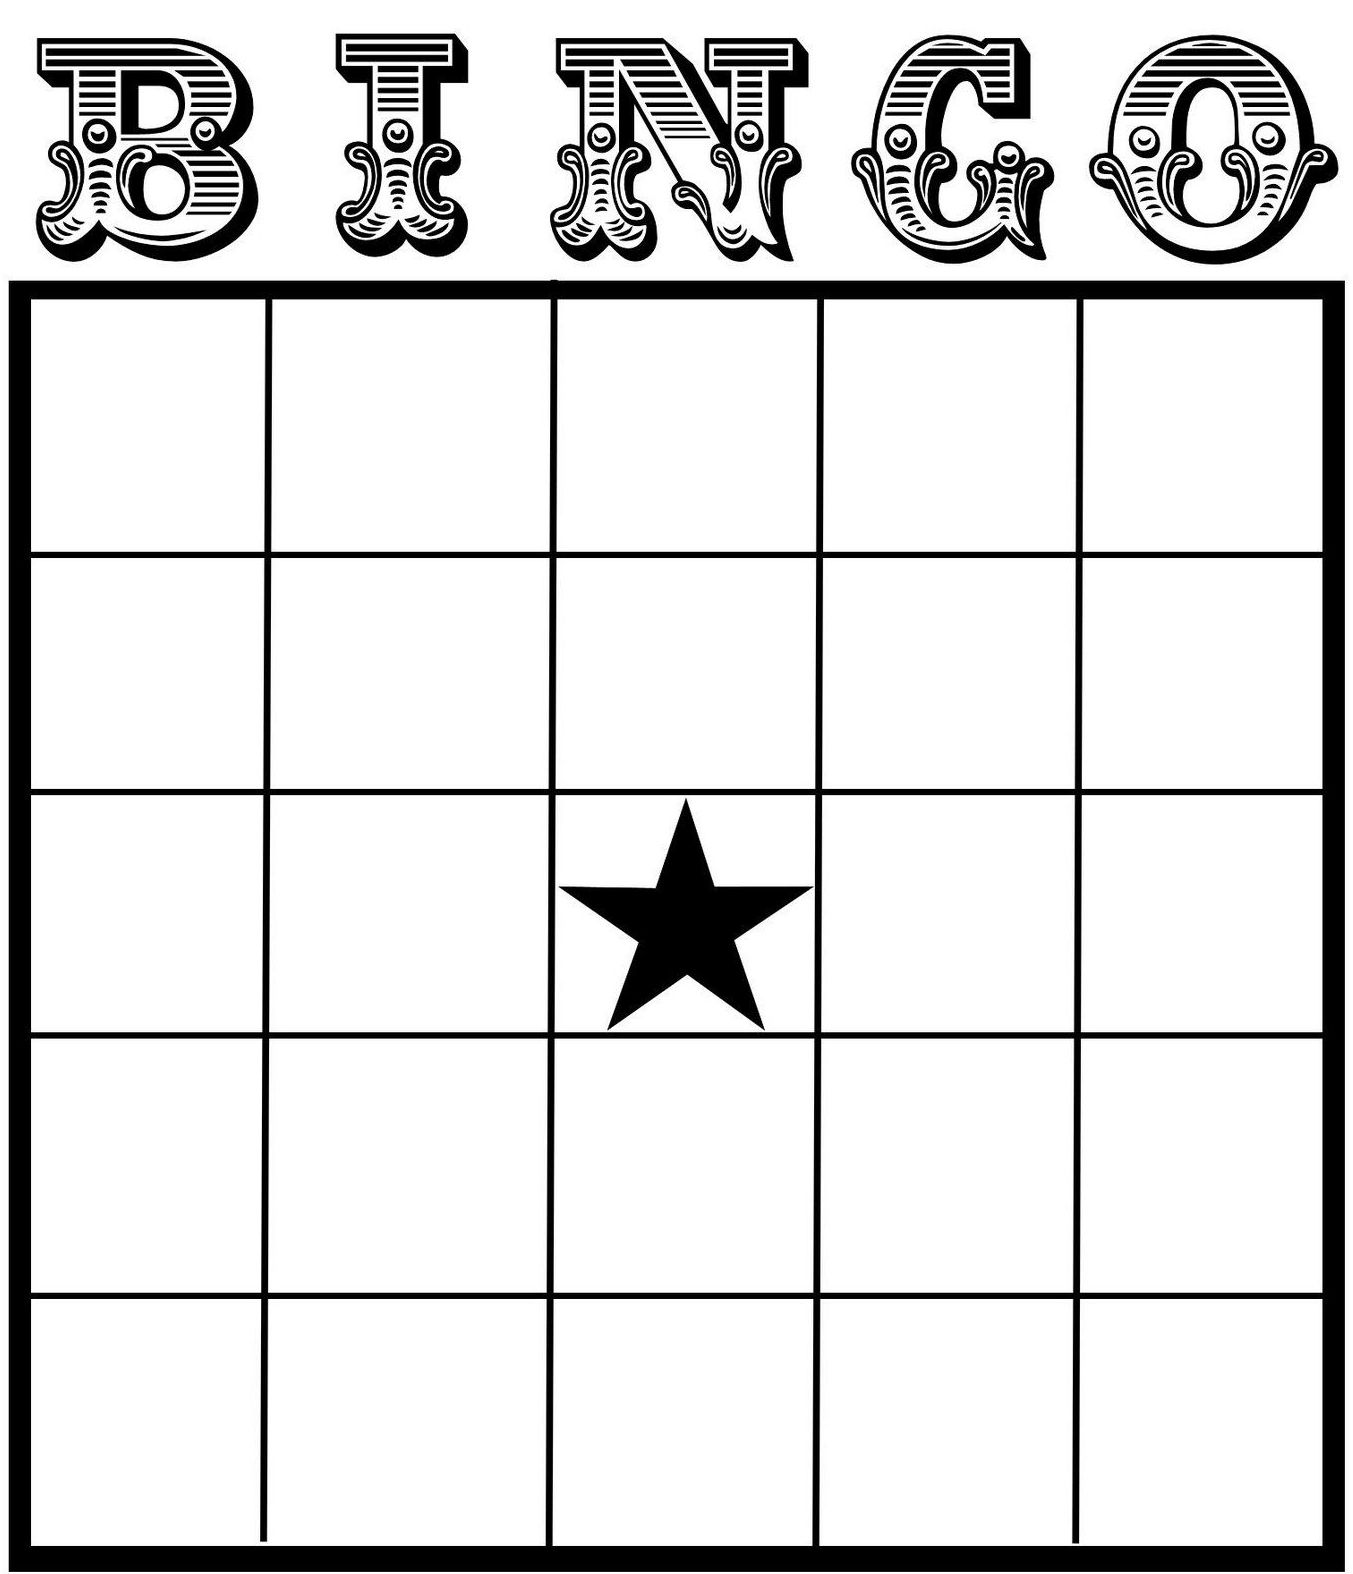 nature bingo